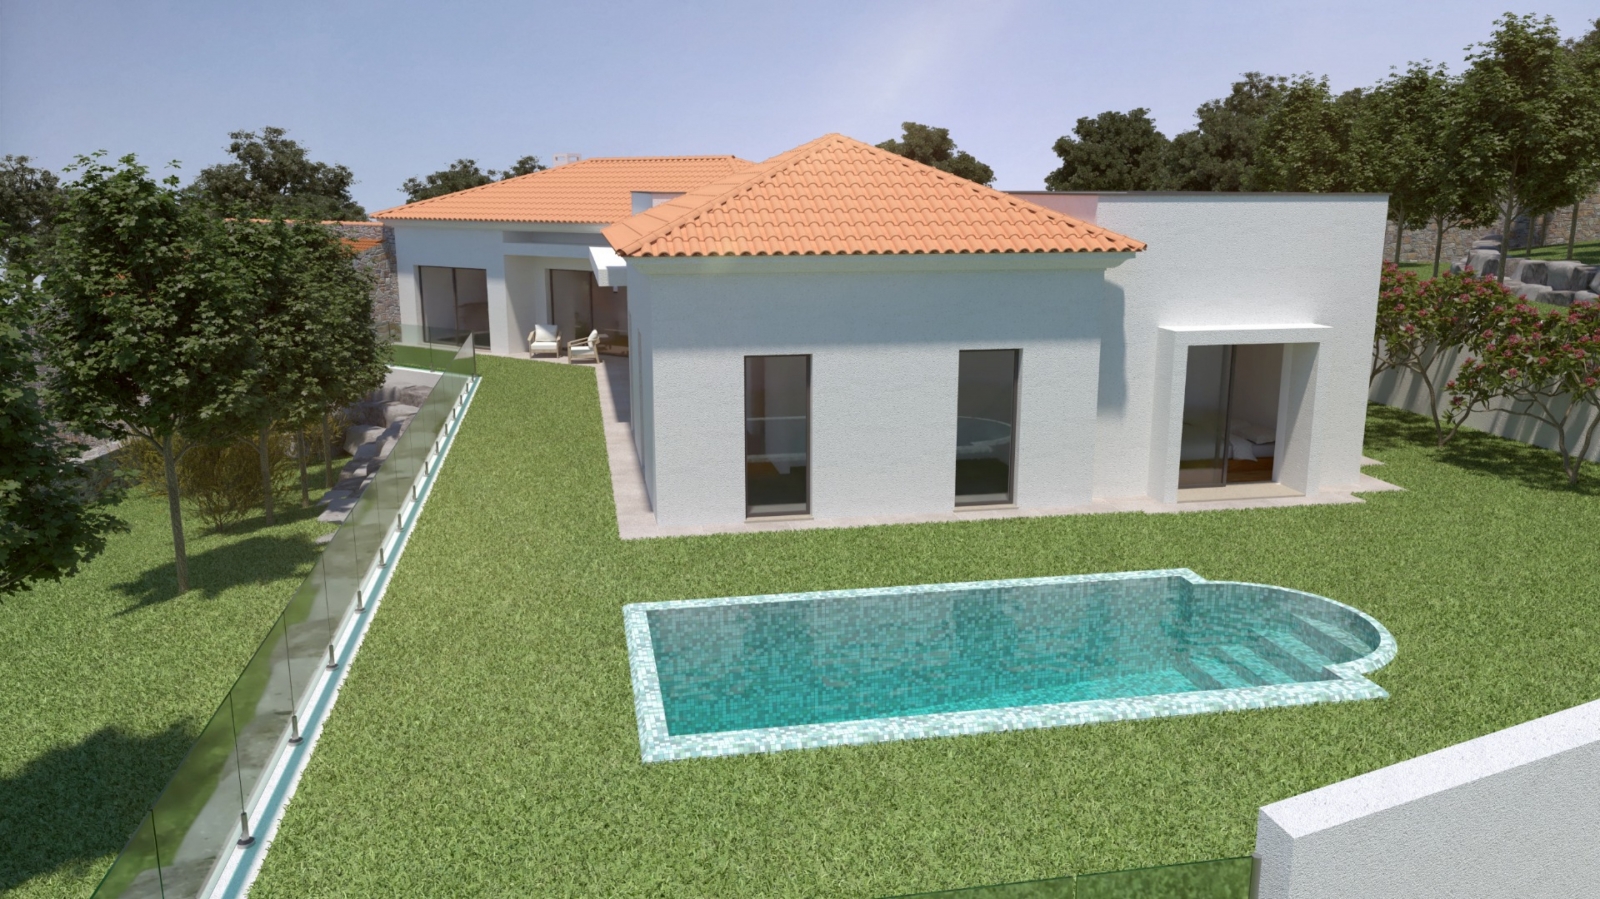 Land for construction of 3 bedroom villa, for sale, in Silves, Algarve_200005